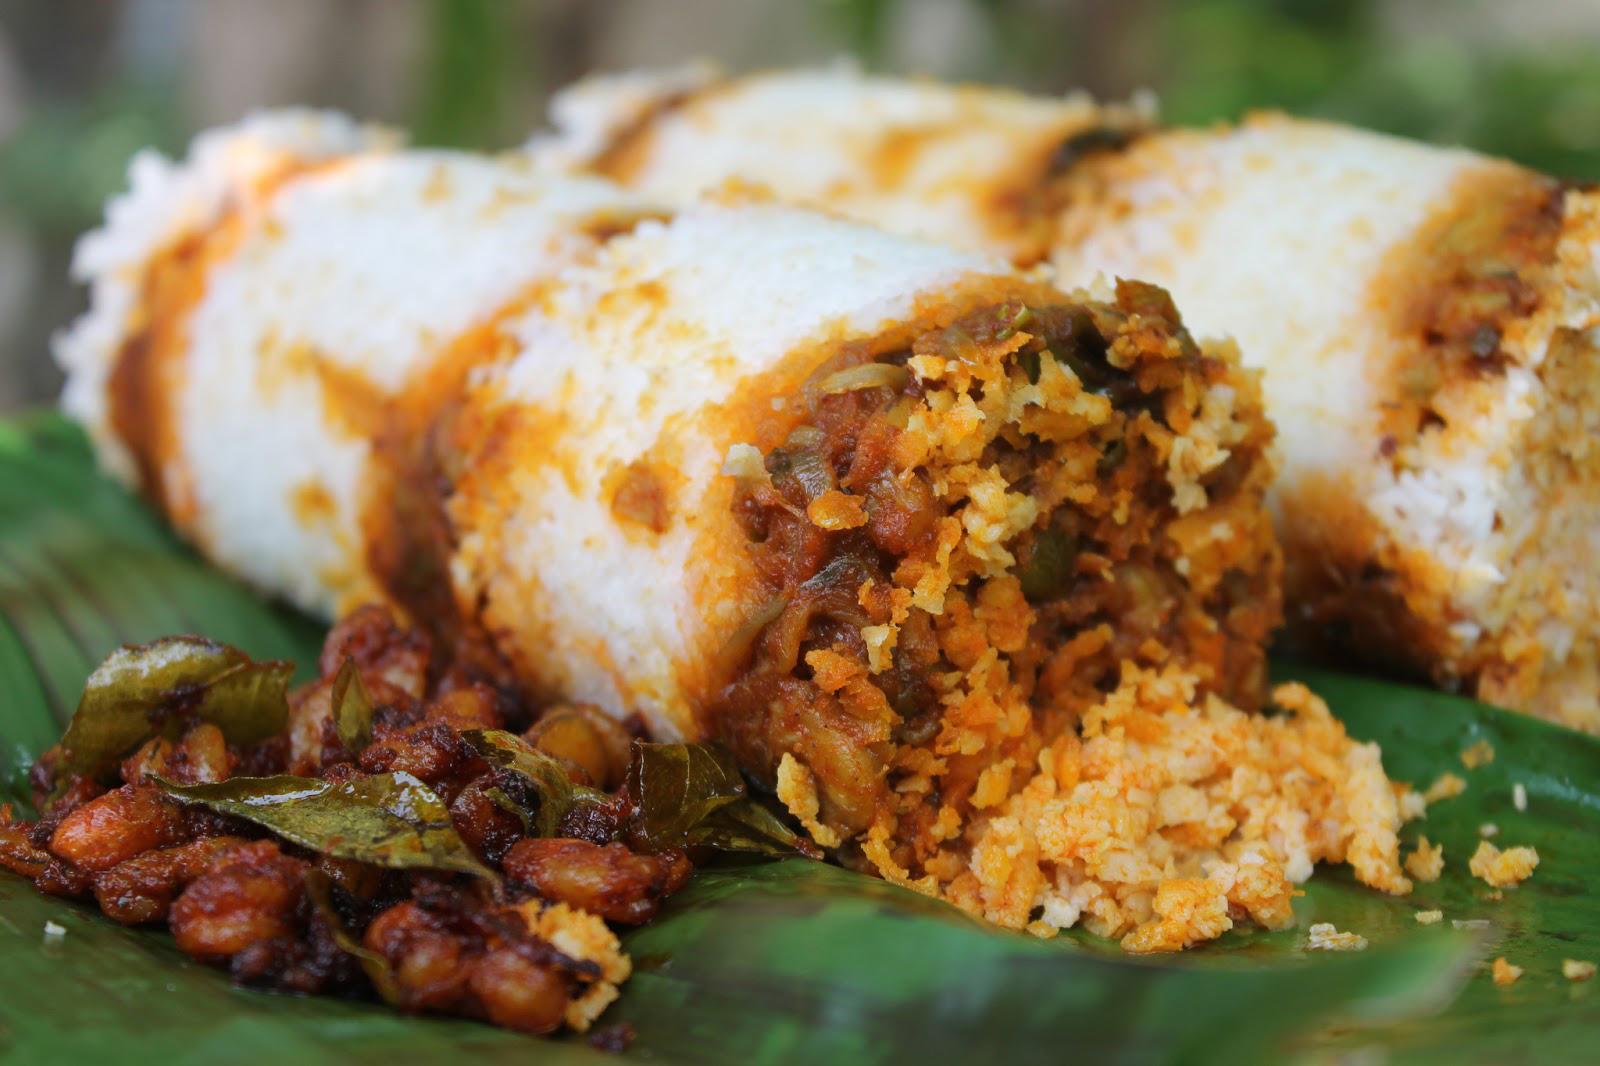 Kerala Food: God's Own Cuisine, Snacks, Food Items, Breakfast Dishes